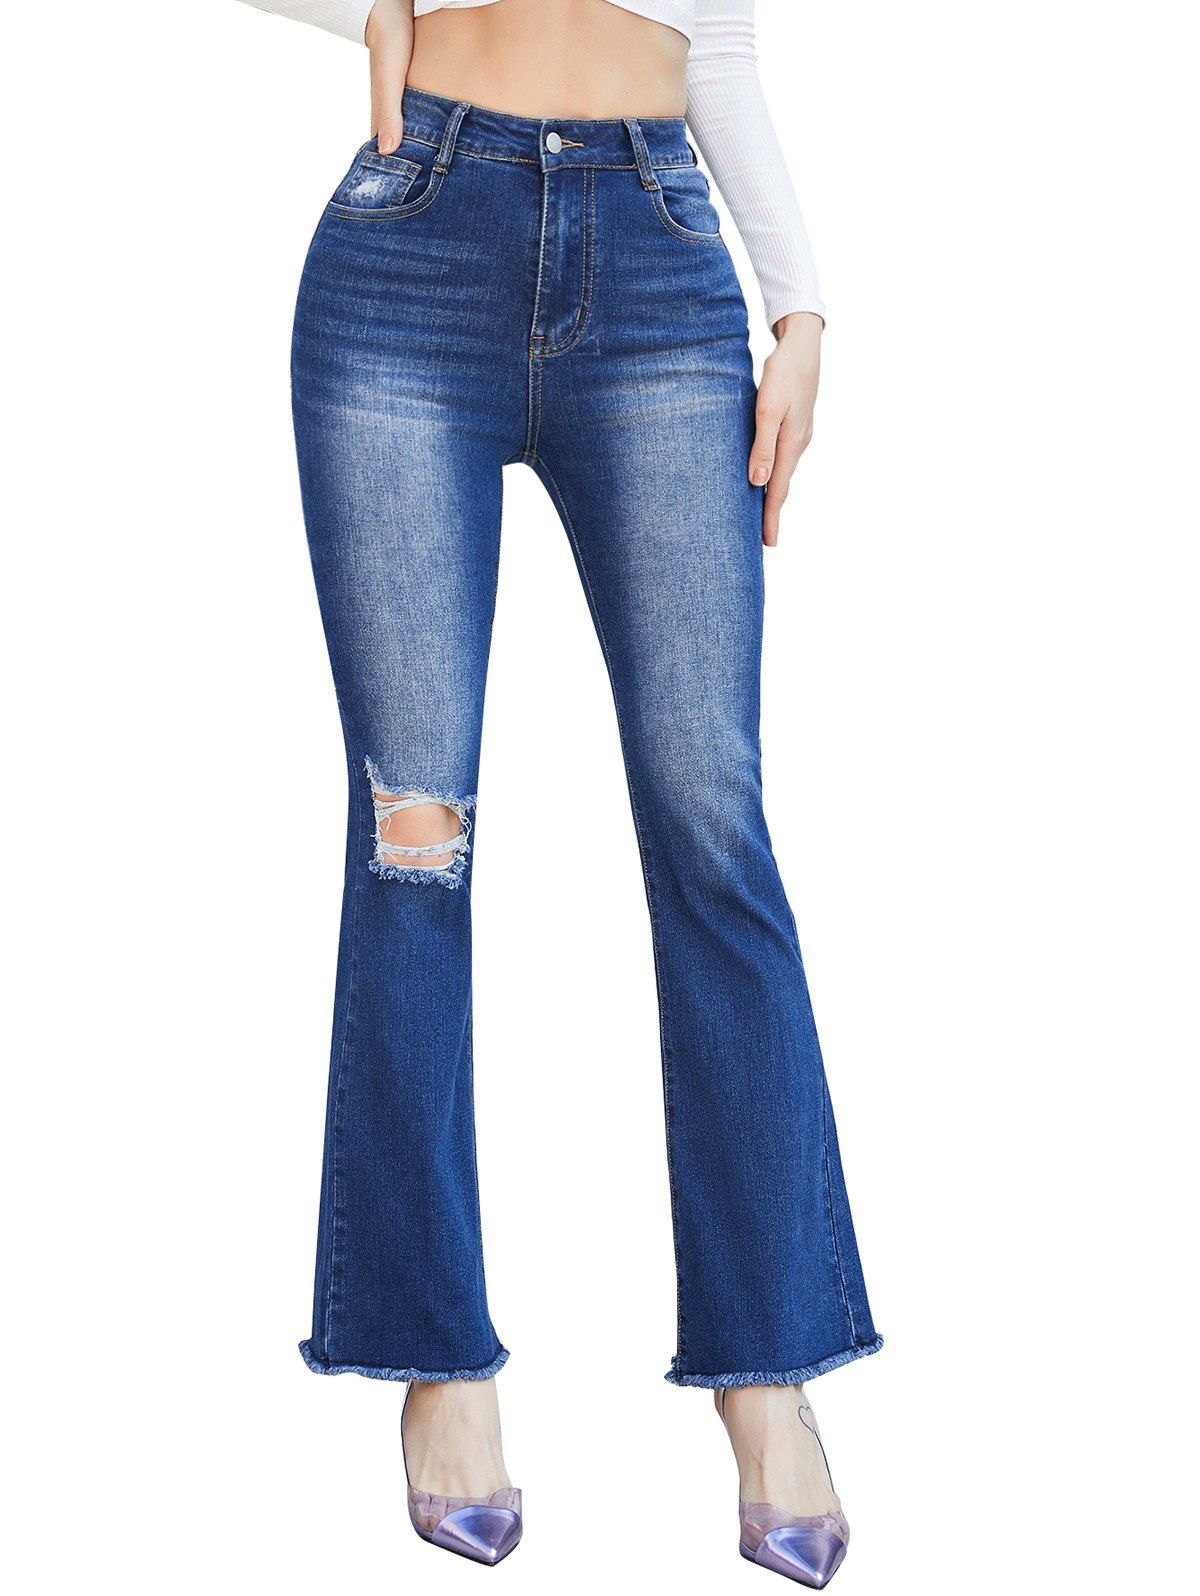 Ripped Flare Jeans Frayed Hem Zipper Fly Pockets Dark Wash High Waisted Denim Pants - BLUE 2XL